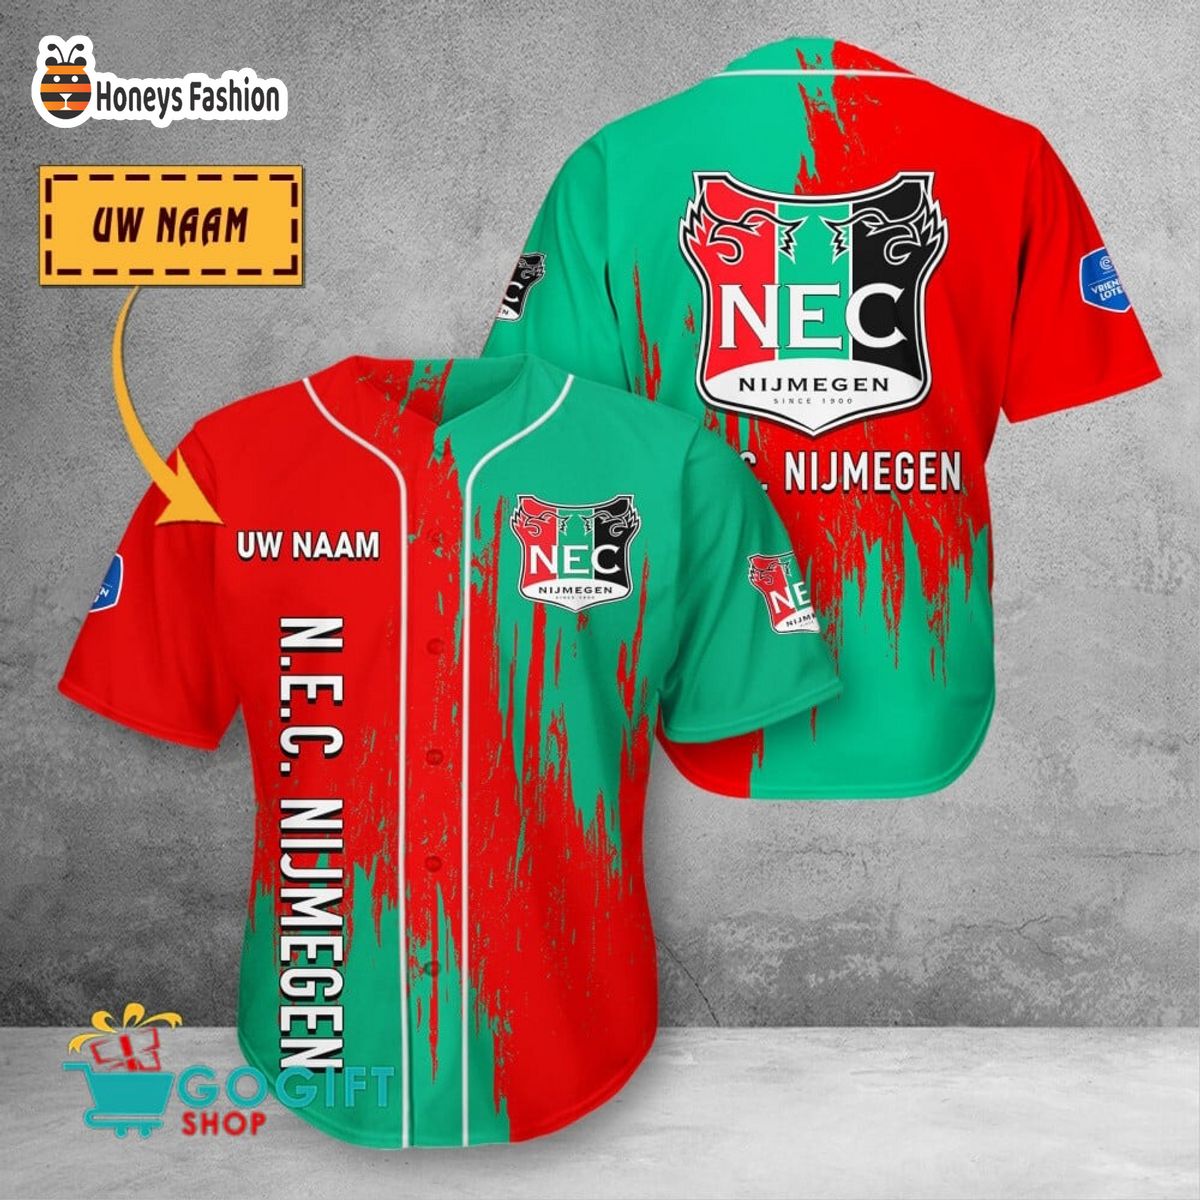 N.E.C. Nijmegen custom name baseball shirt